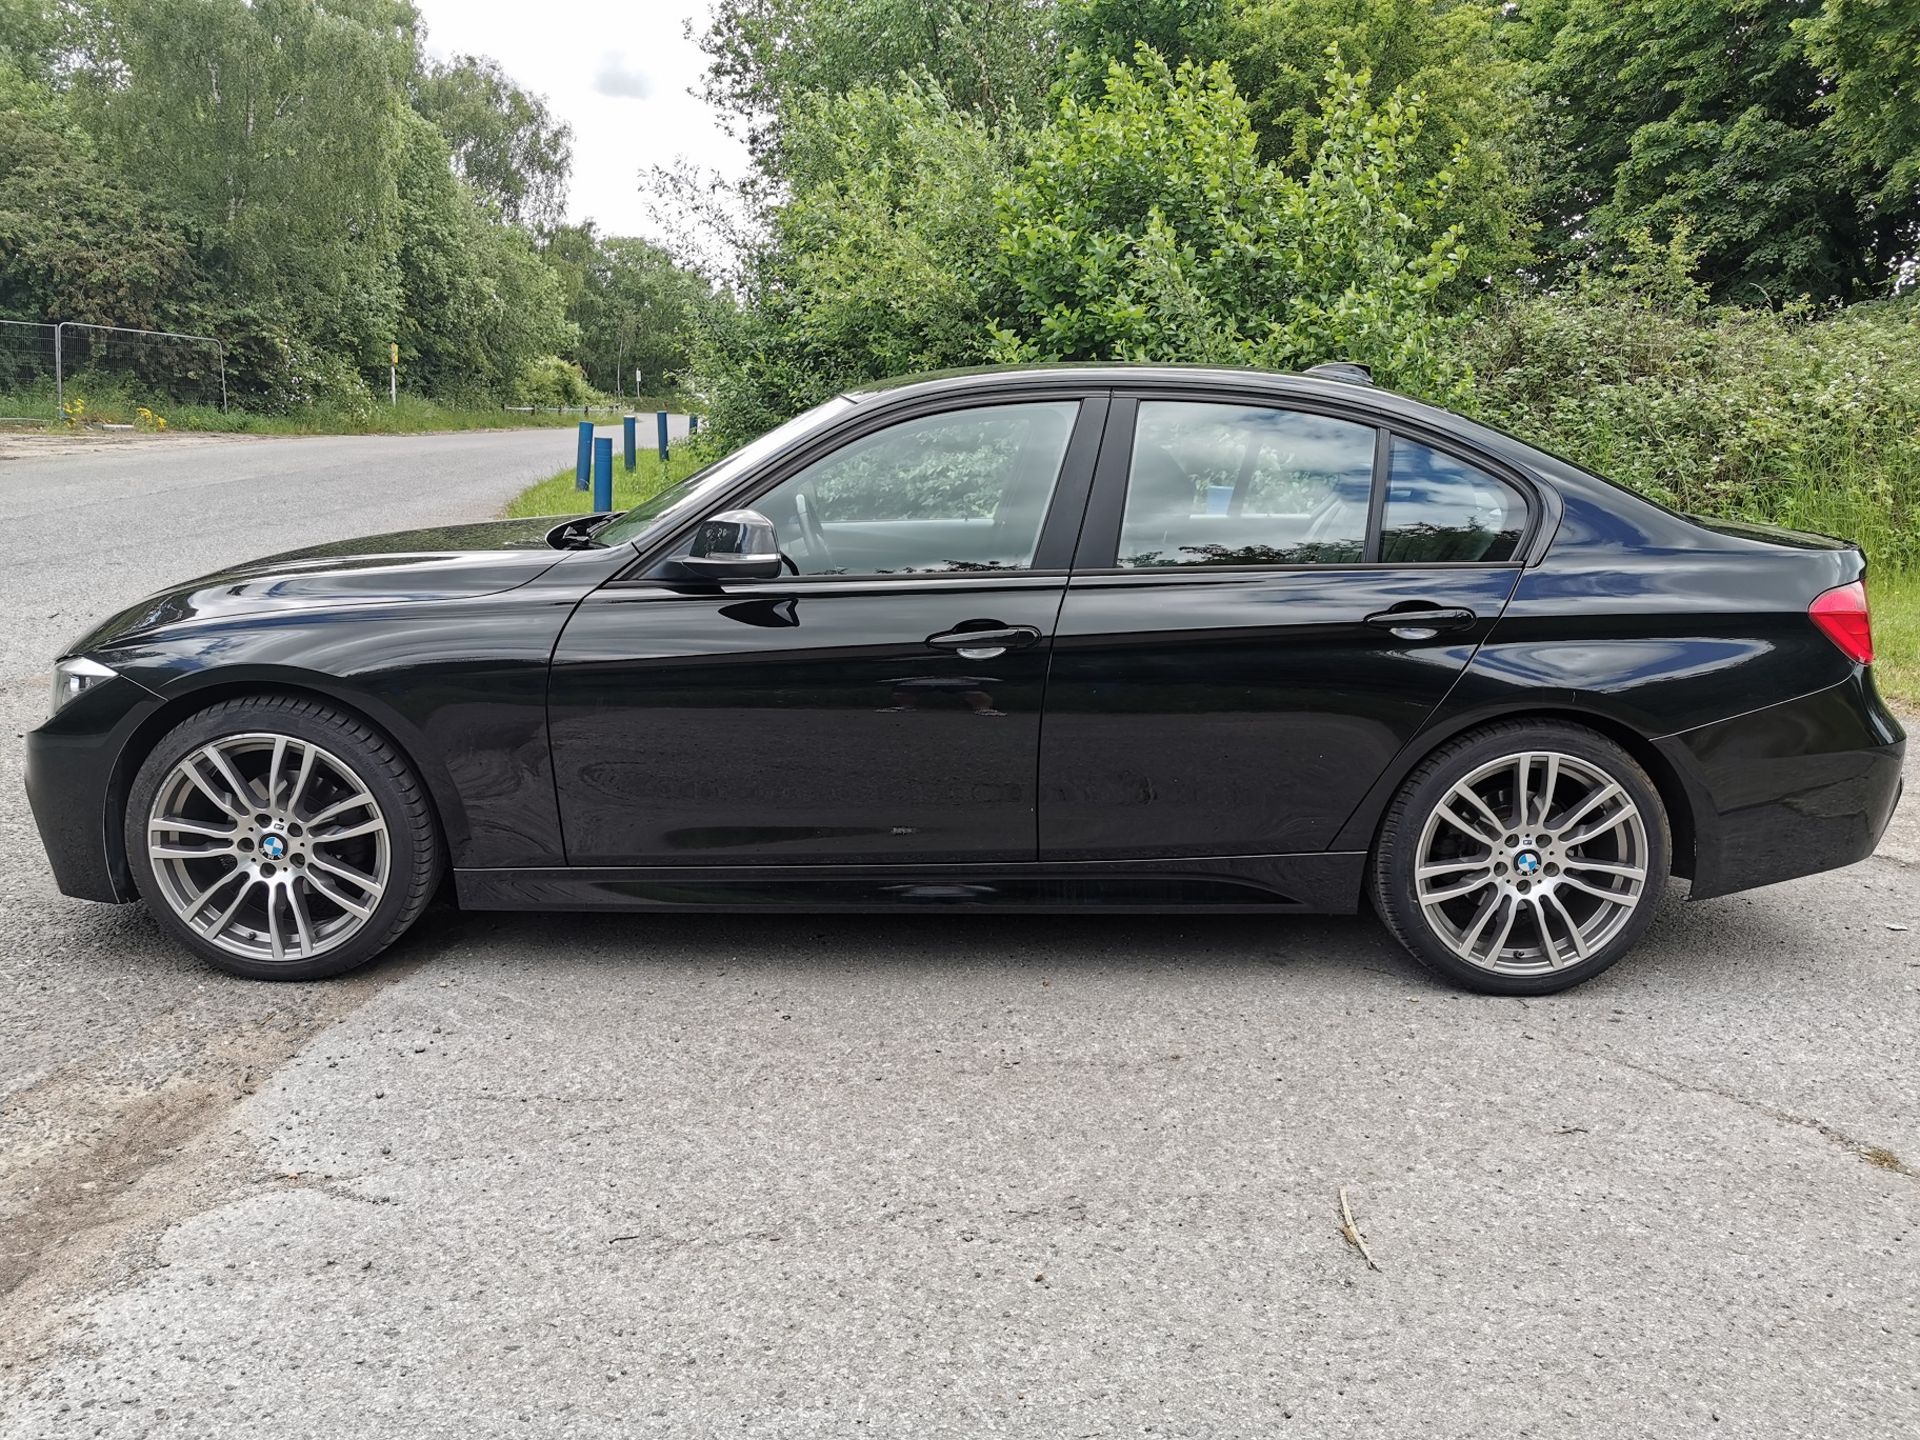 2013/13 REG BMW 320D EFFICIENT DYNAMICS 2.0 DIESEL BLACK 4 DOOR SALOON *NO VAT* - Image 4 of 30